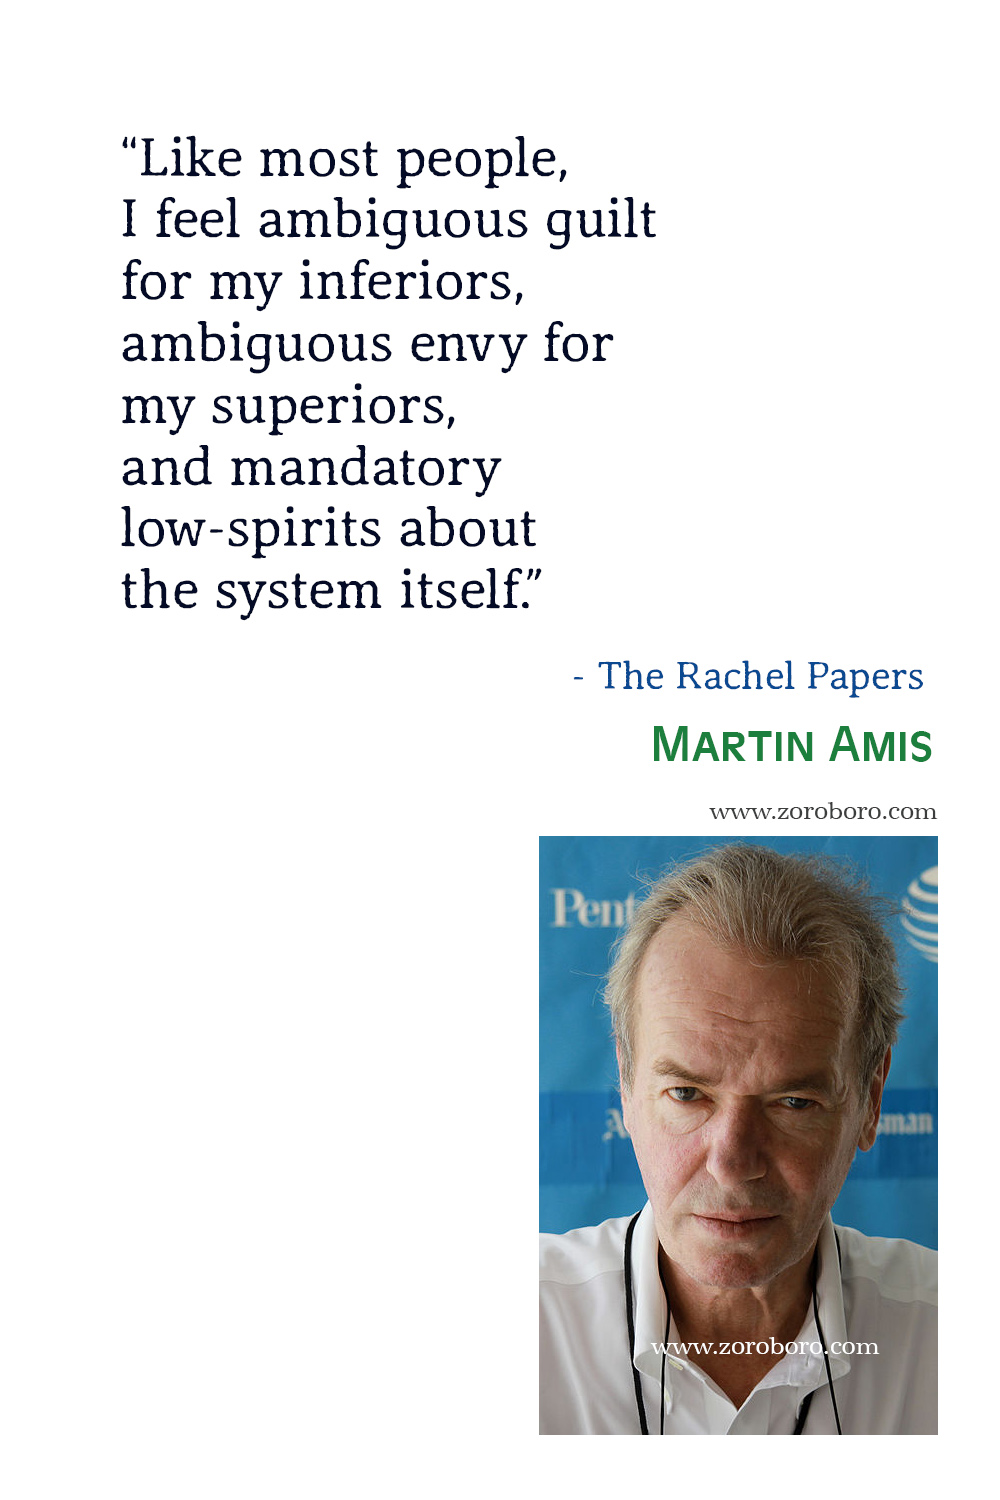 Martin Amis Quotes, Martin Amis Books, Martin Amis London Fields, Money, Time's Arrow & House of Meetings Quotes. Martin Amis Quotes